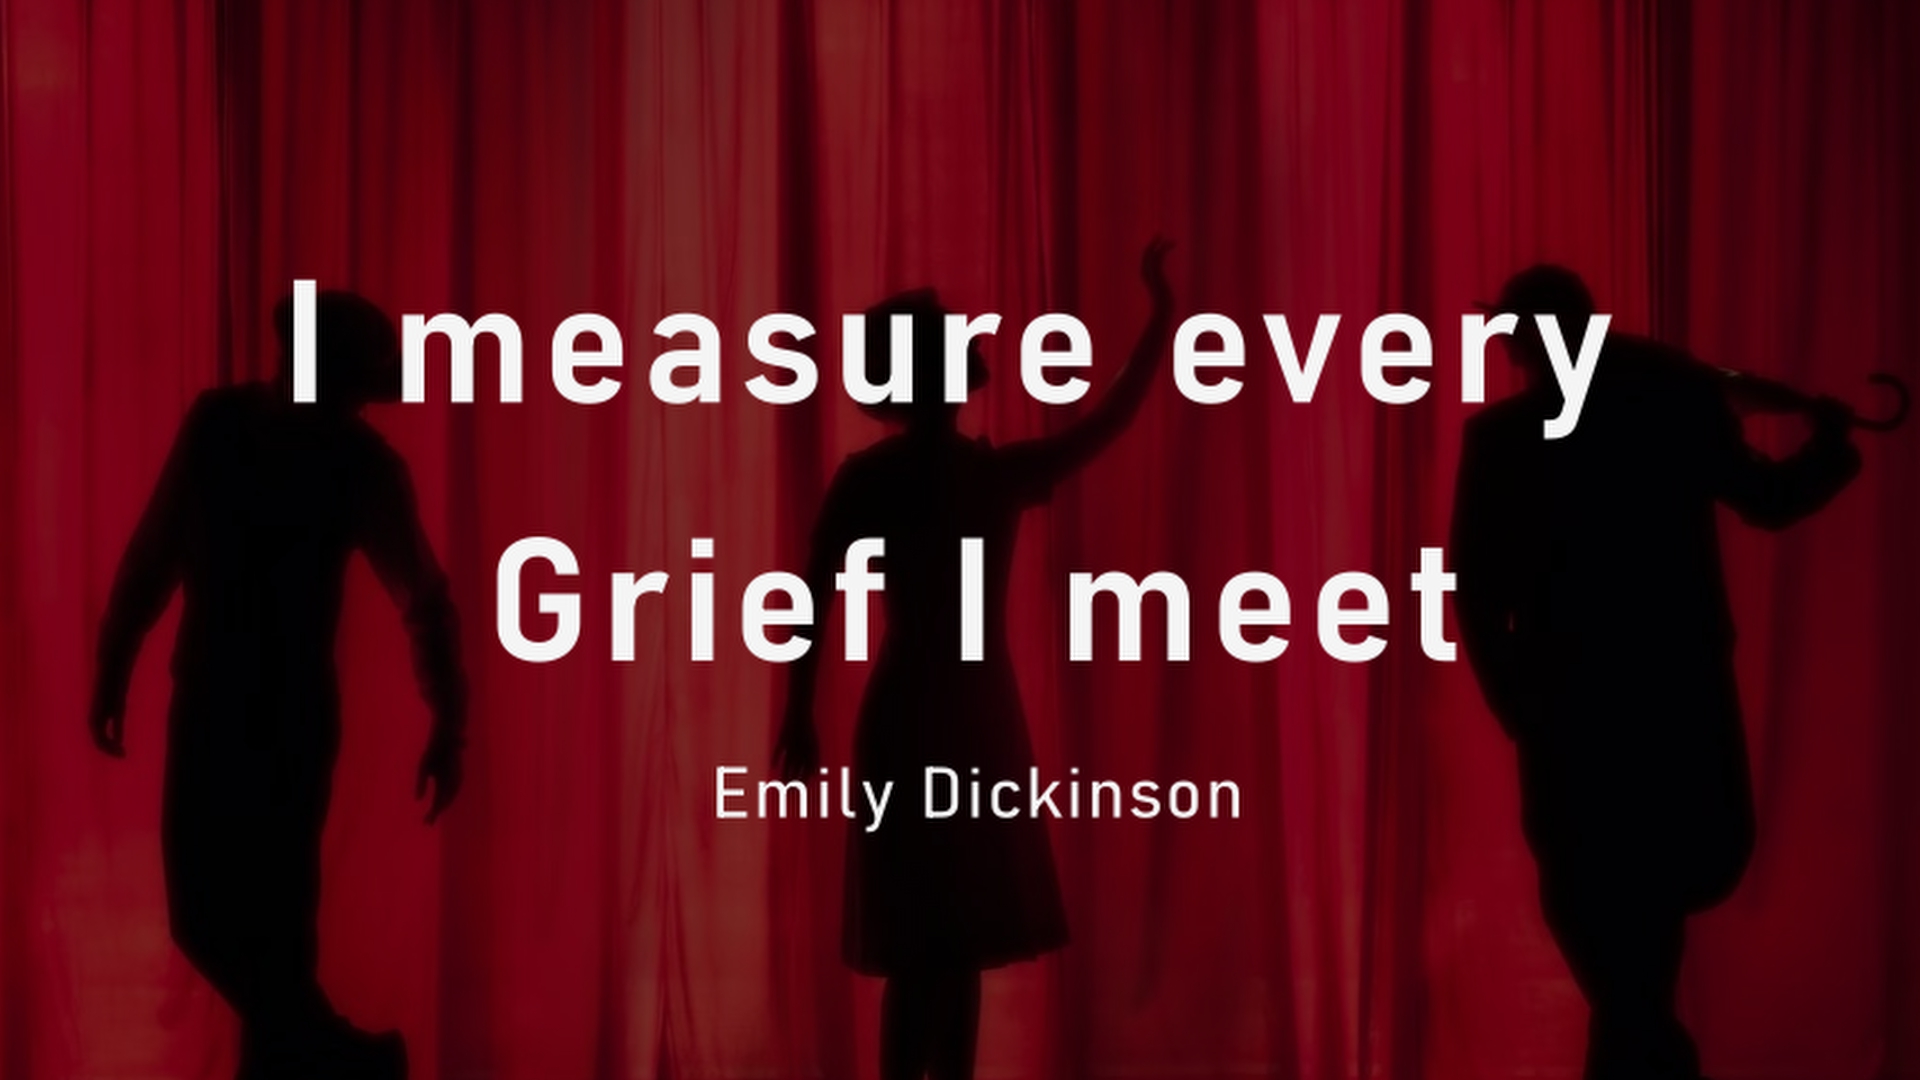 I measure every Grief Dickinson